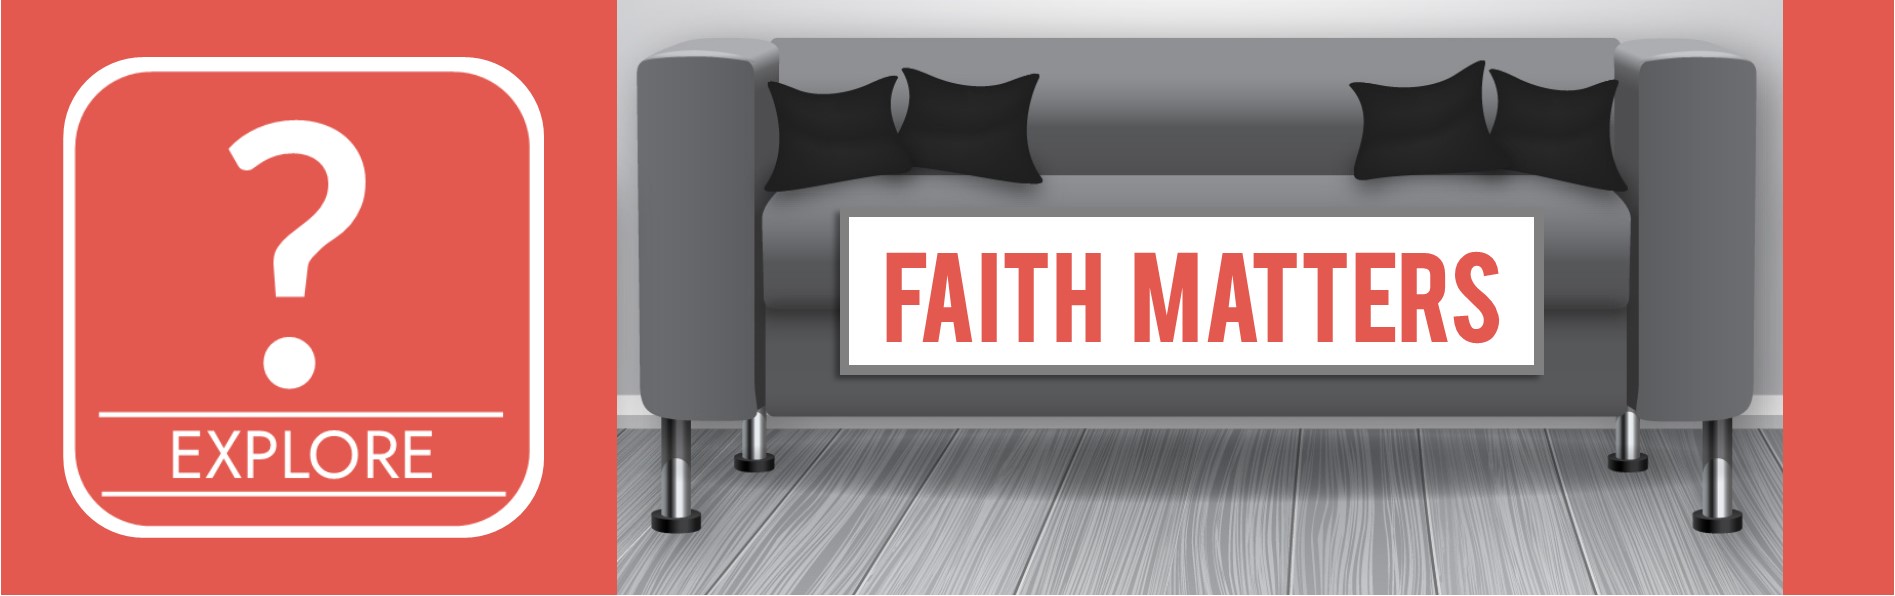 Faith matter web page